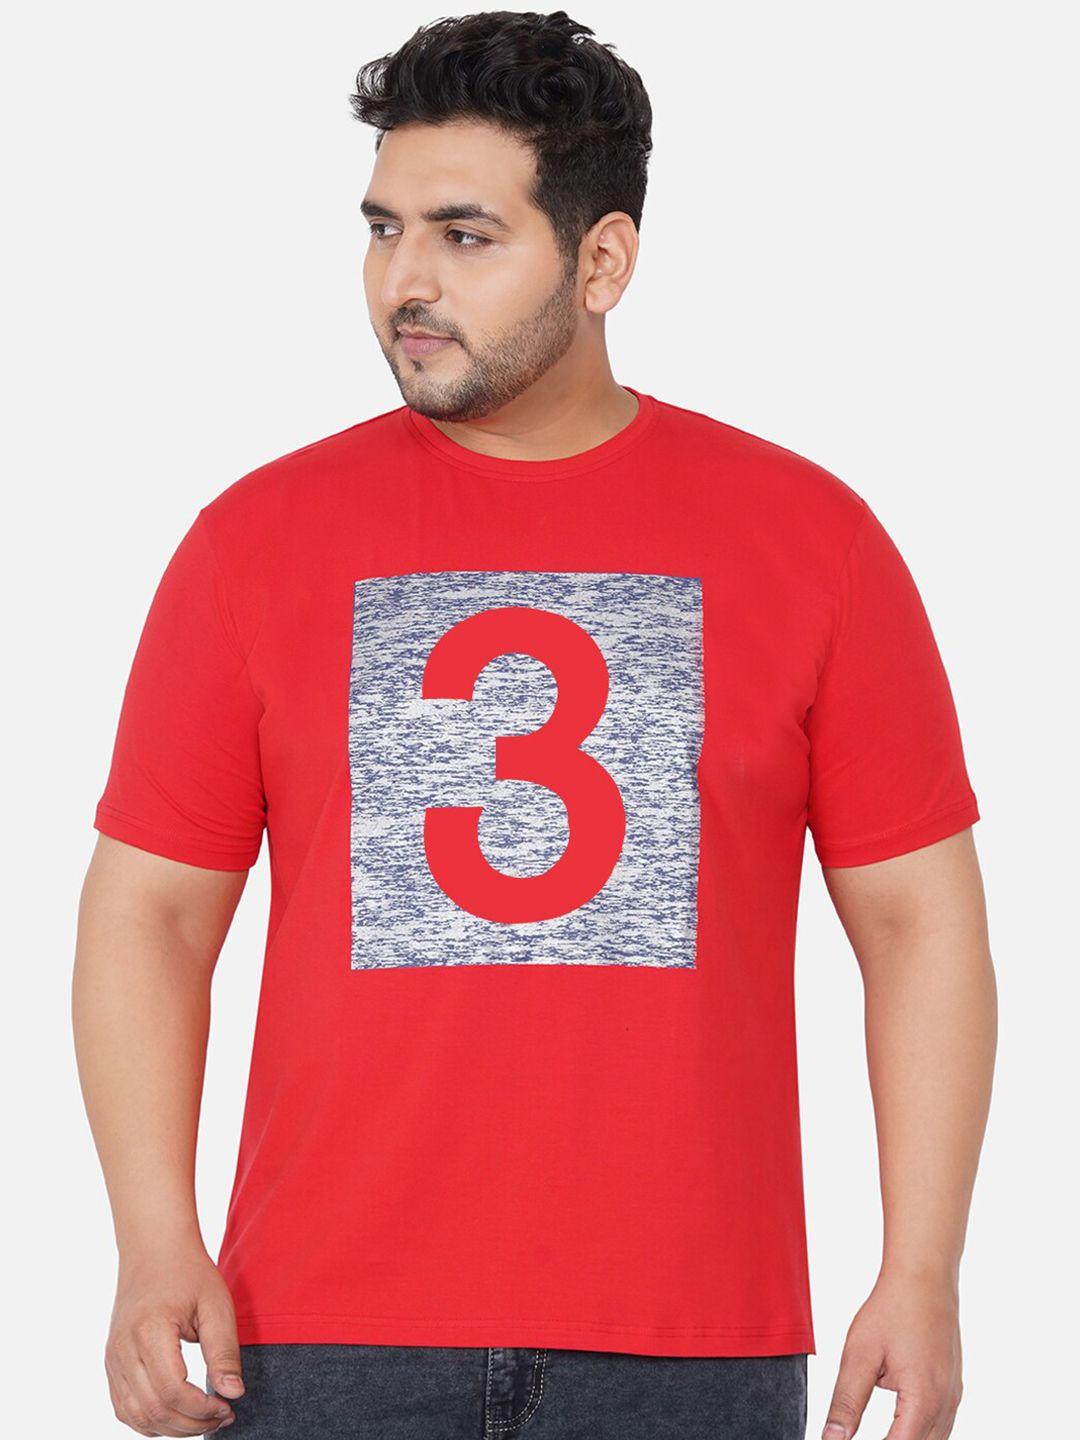 john pride men plus size red & blue typography printed cotton t-shirt